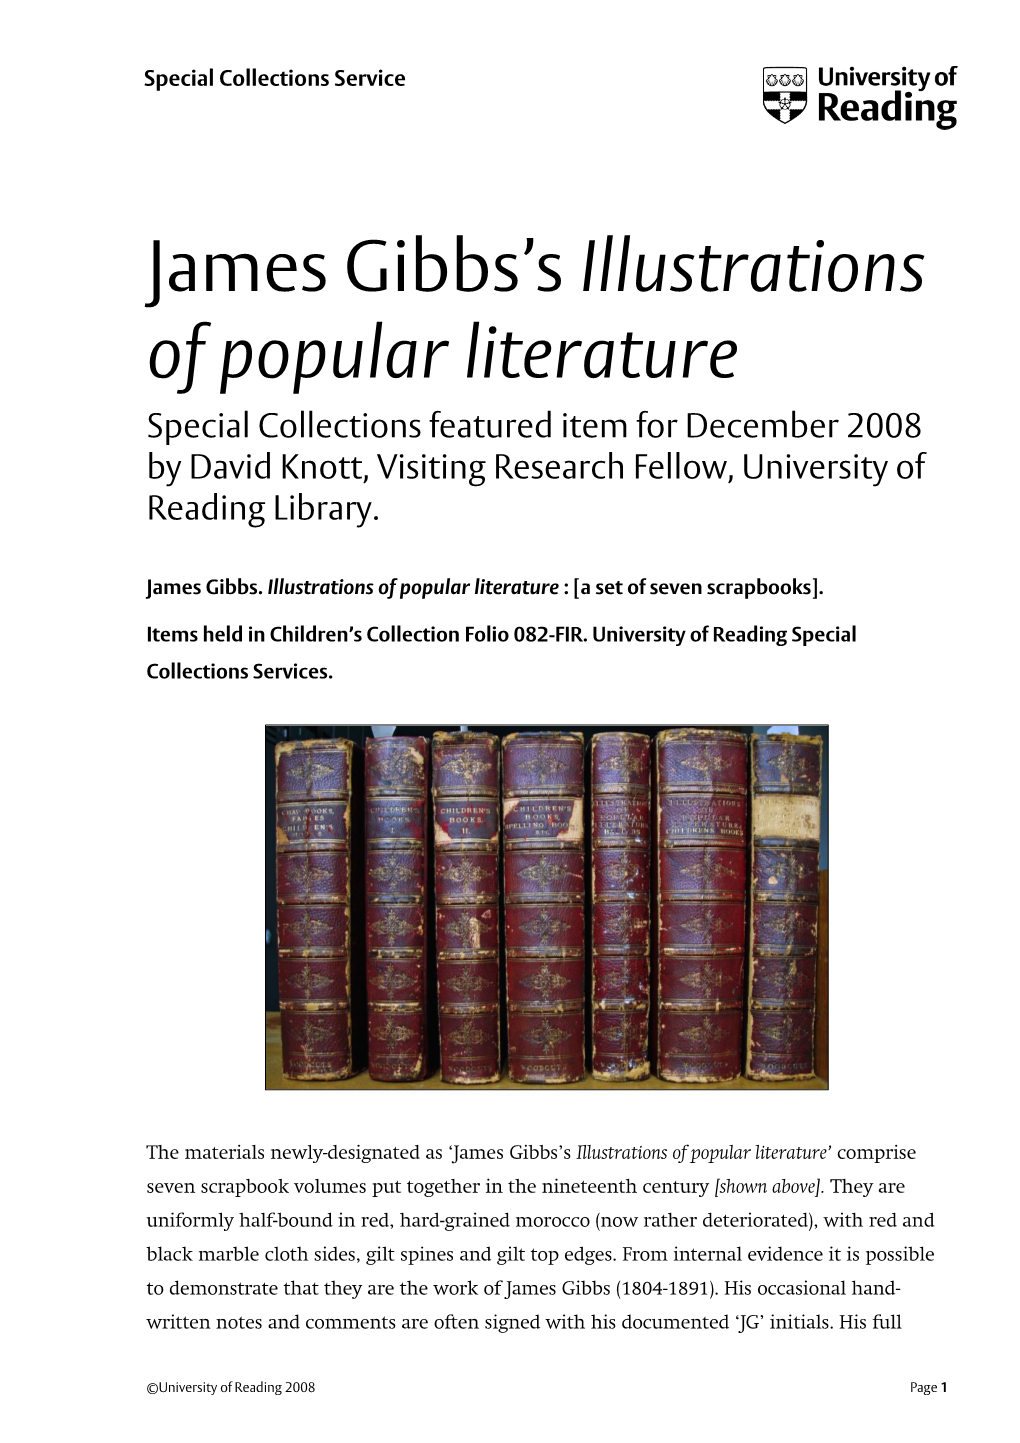 James Gibbs's Illustrations of Popular Literature